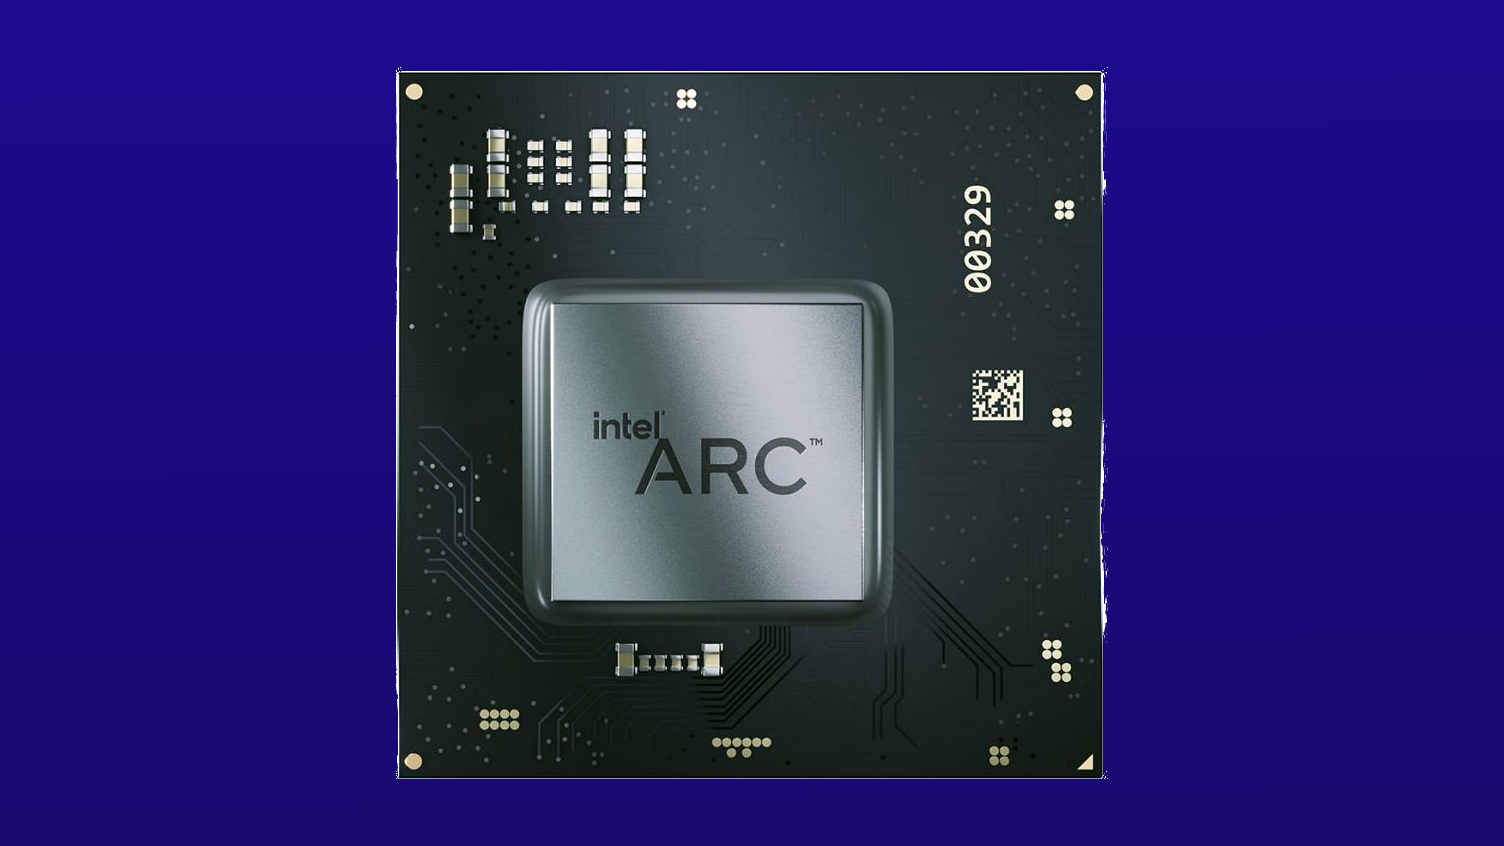 Imagen promocional de la GPU de la computadora portátil Intel Arc sobre fondo azul